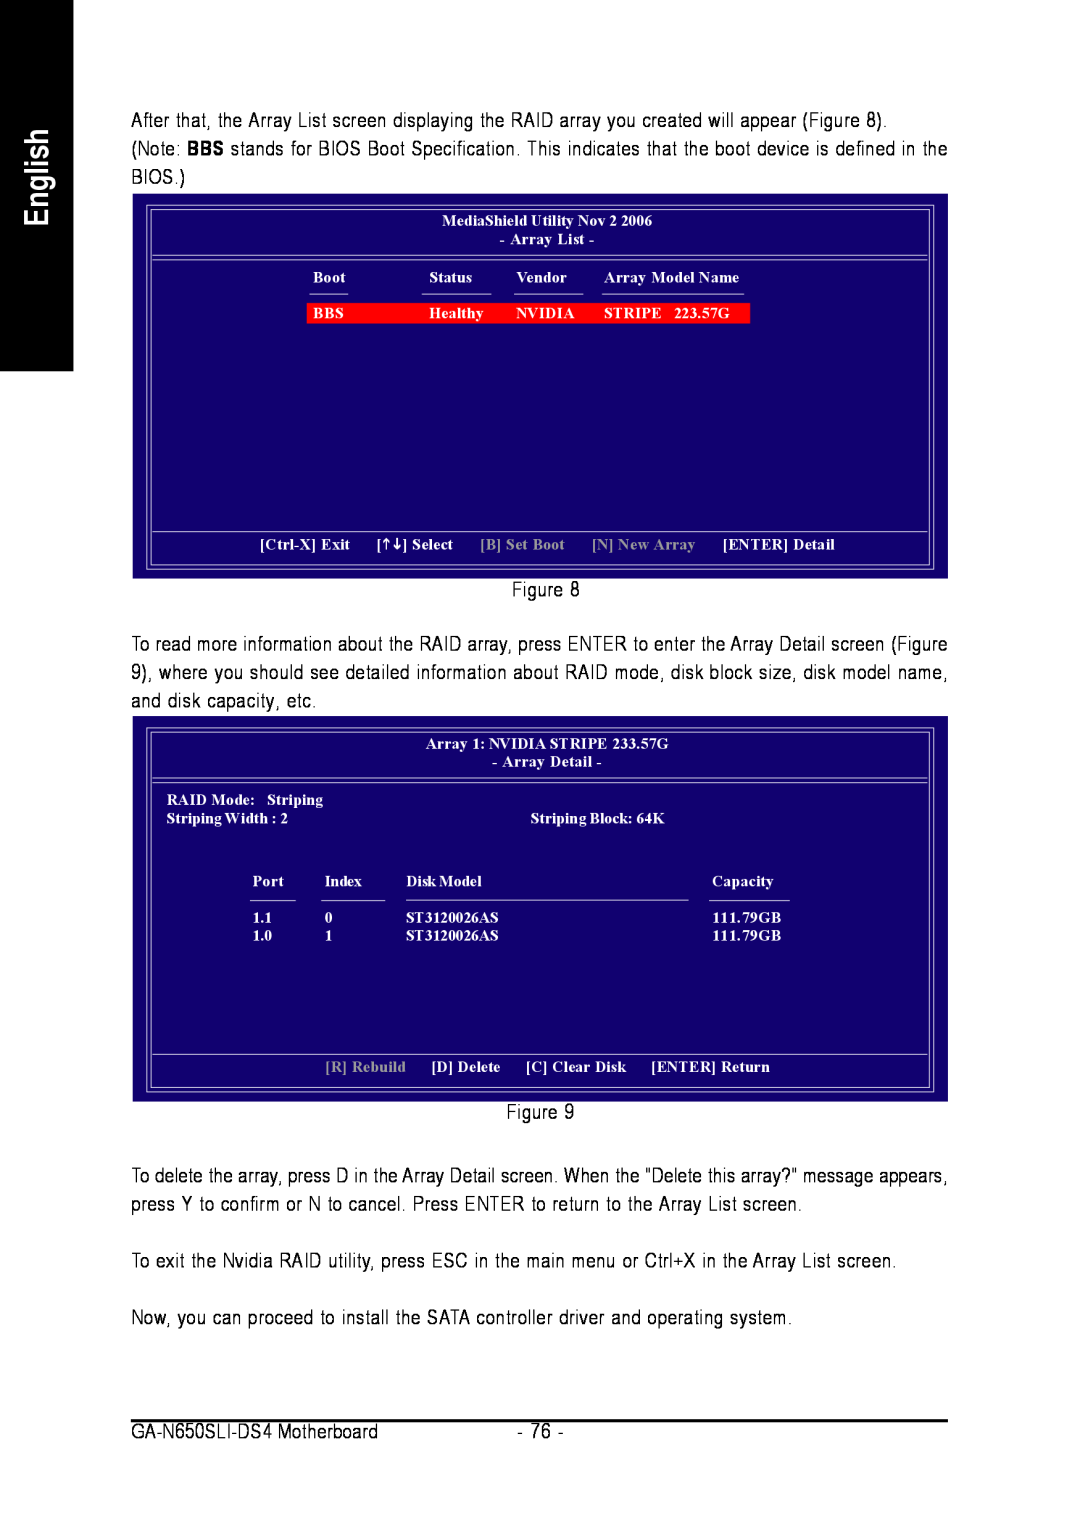 Intel GA-N650SLI-DS4 user manual English, B Set Boot, N New Array ENTER Detail, R Rebuild 